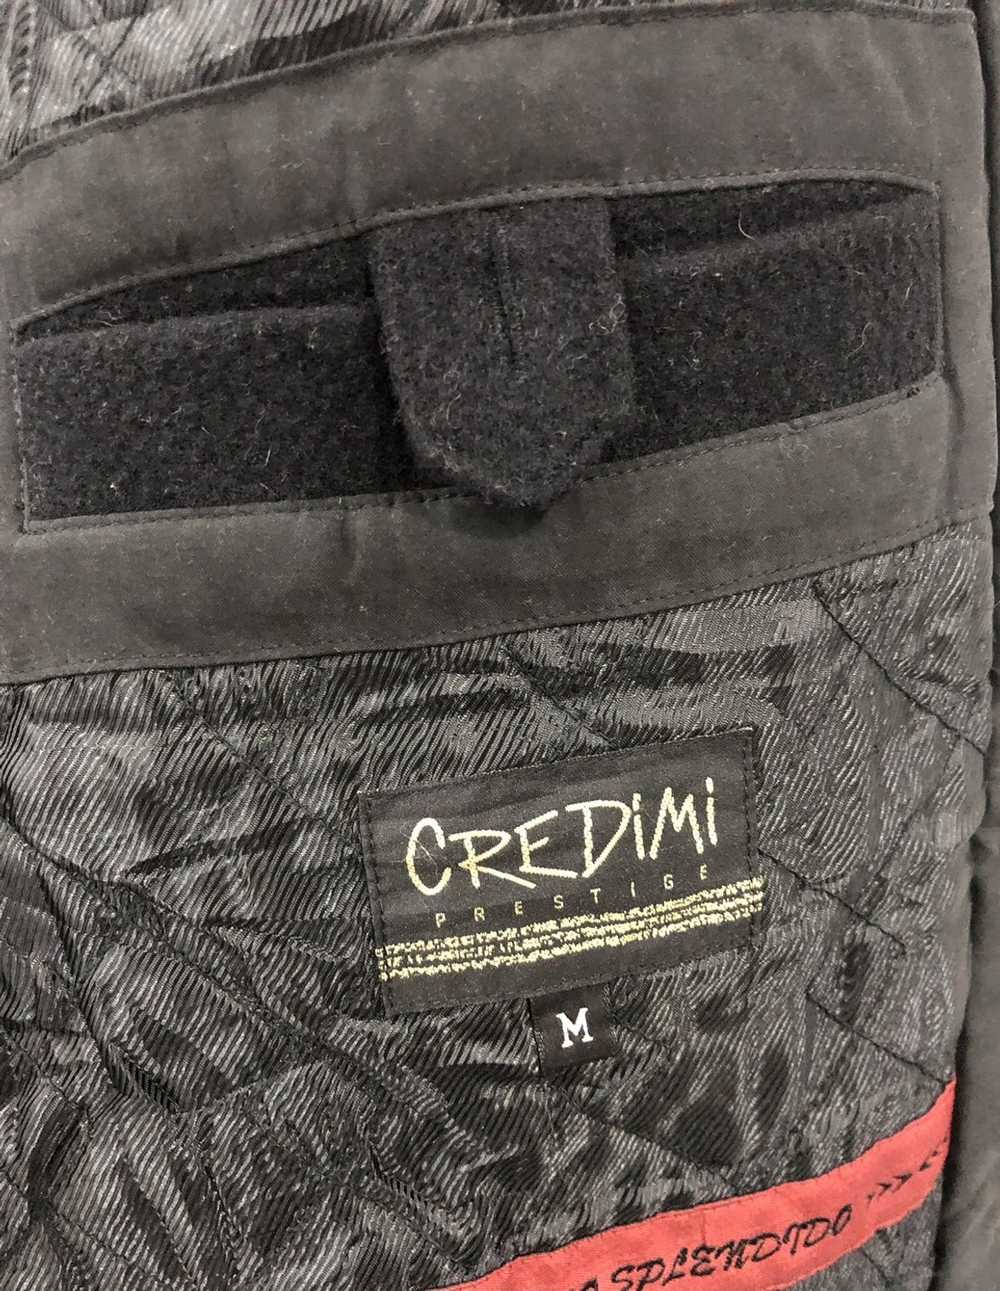 Japanese Brand Credimi Prestige Black Jacket - image 6